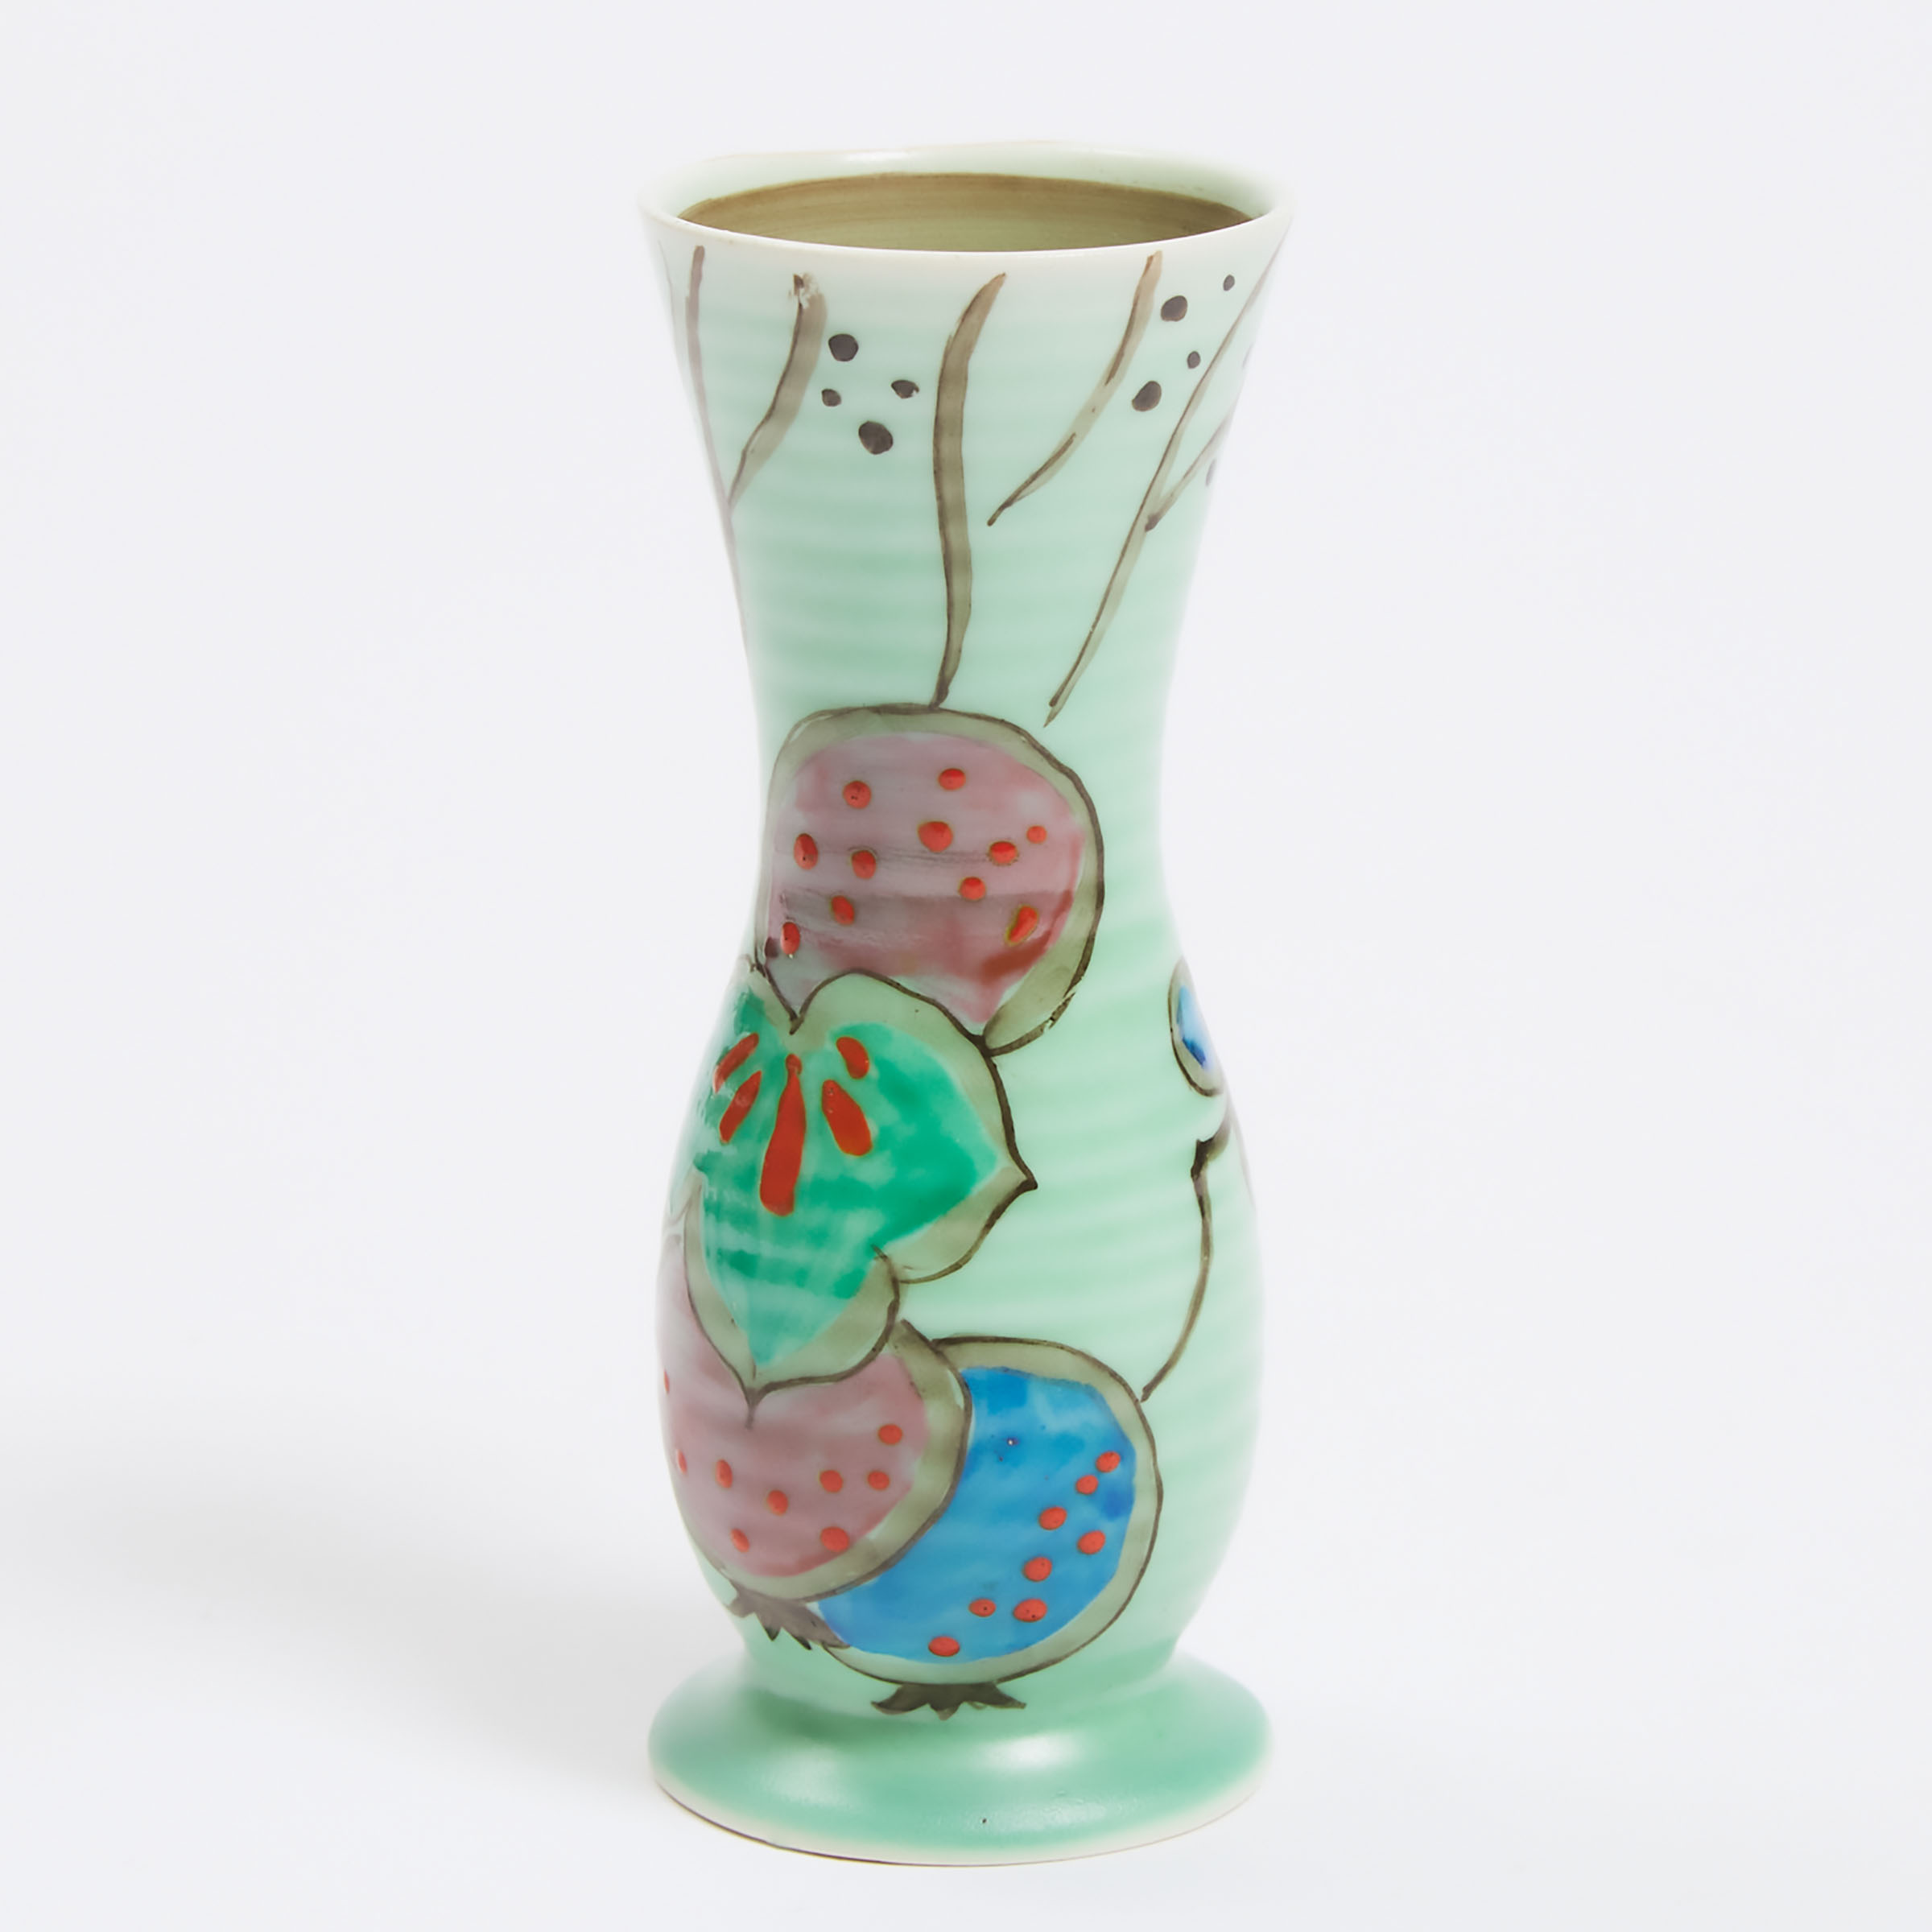 Clarice Cliff Small Vase, for Wilkinson, c.1930